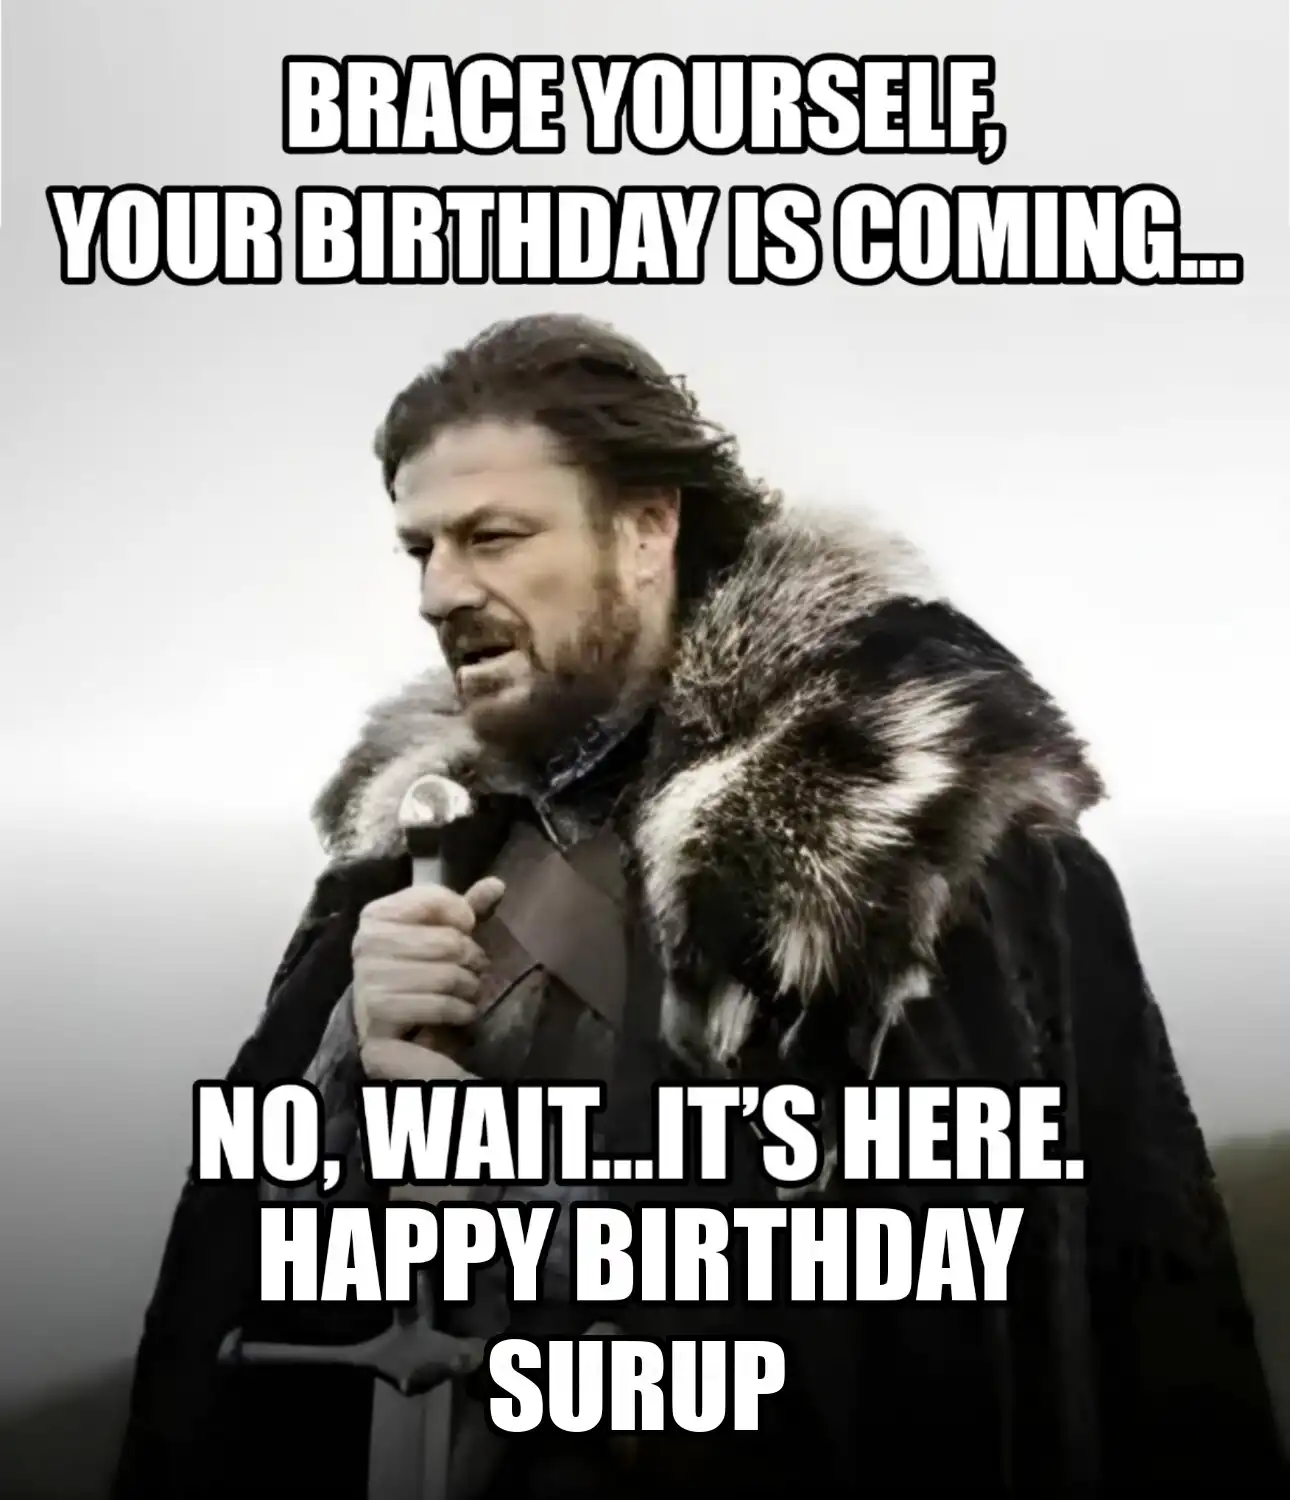 Happy Birthday Surup Brace Yourself Your Birthday Is Coming Meme